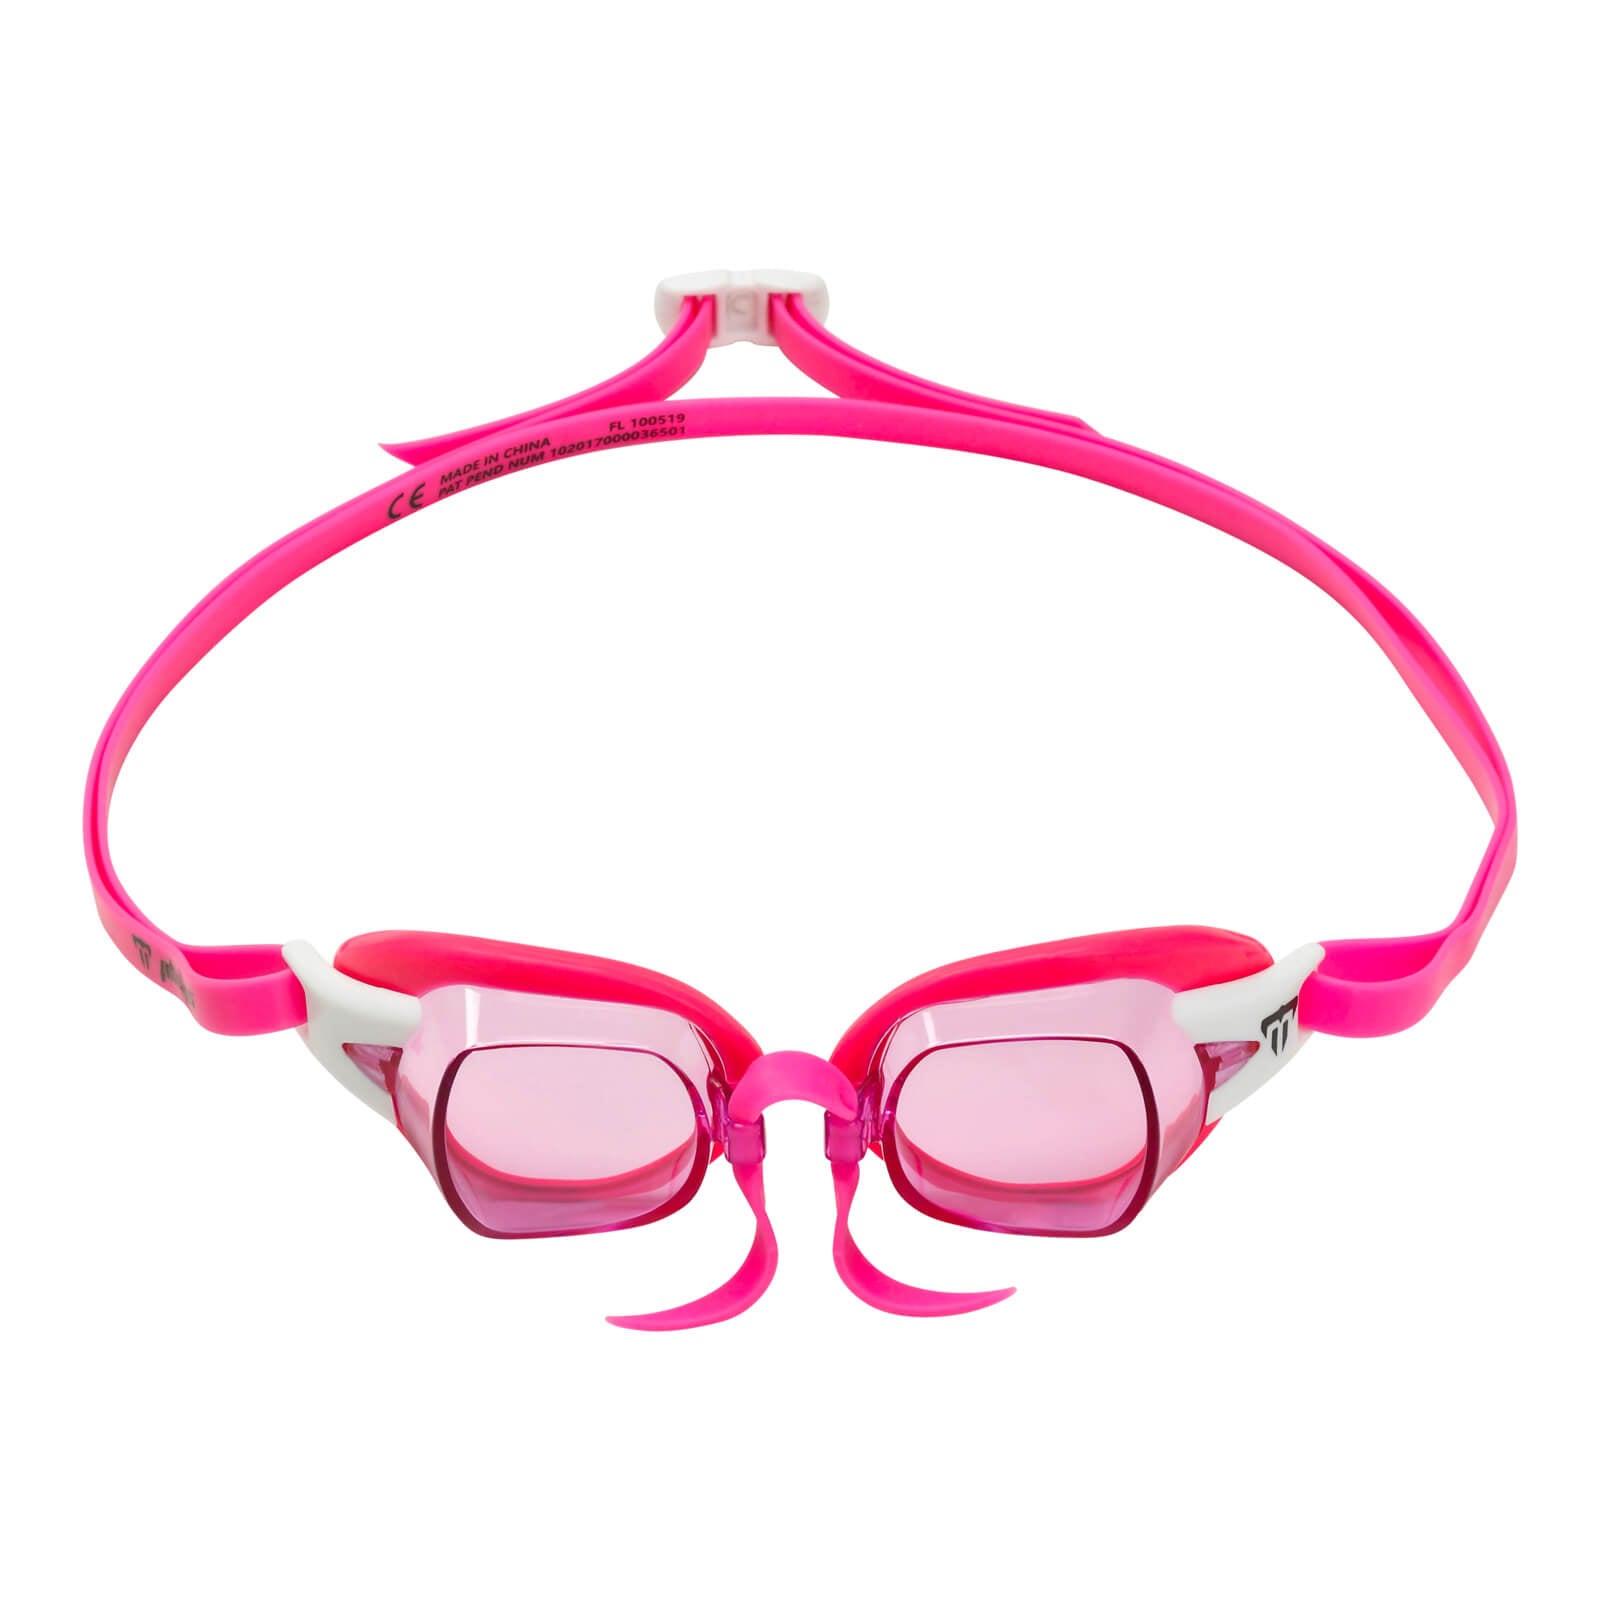 Phelps Chronos Men's Swimming Goggles Pink/White Pink Alternate 1